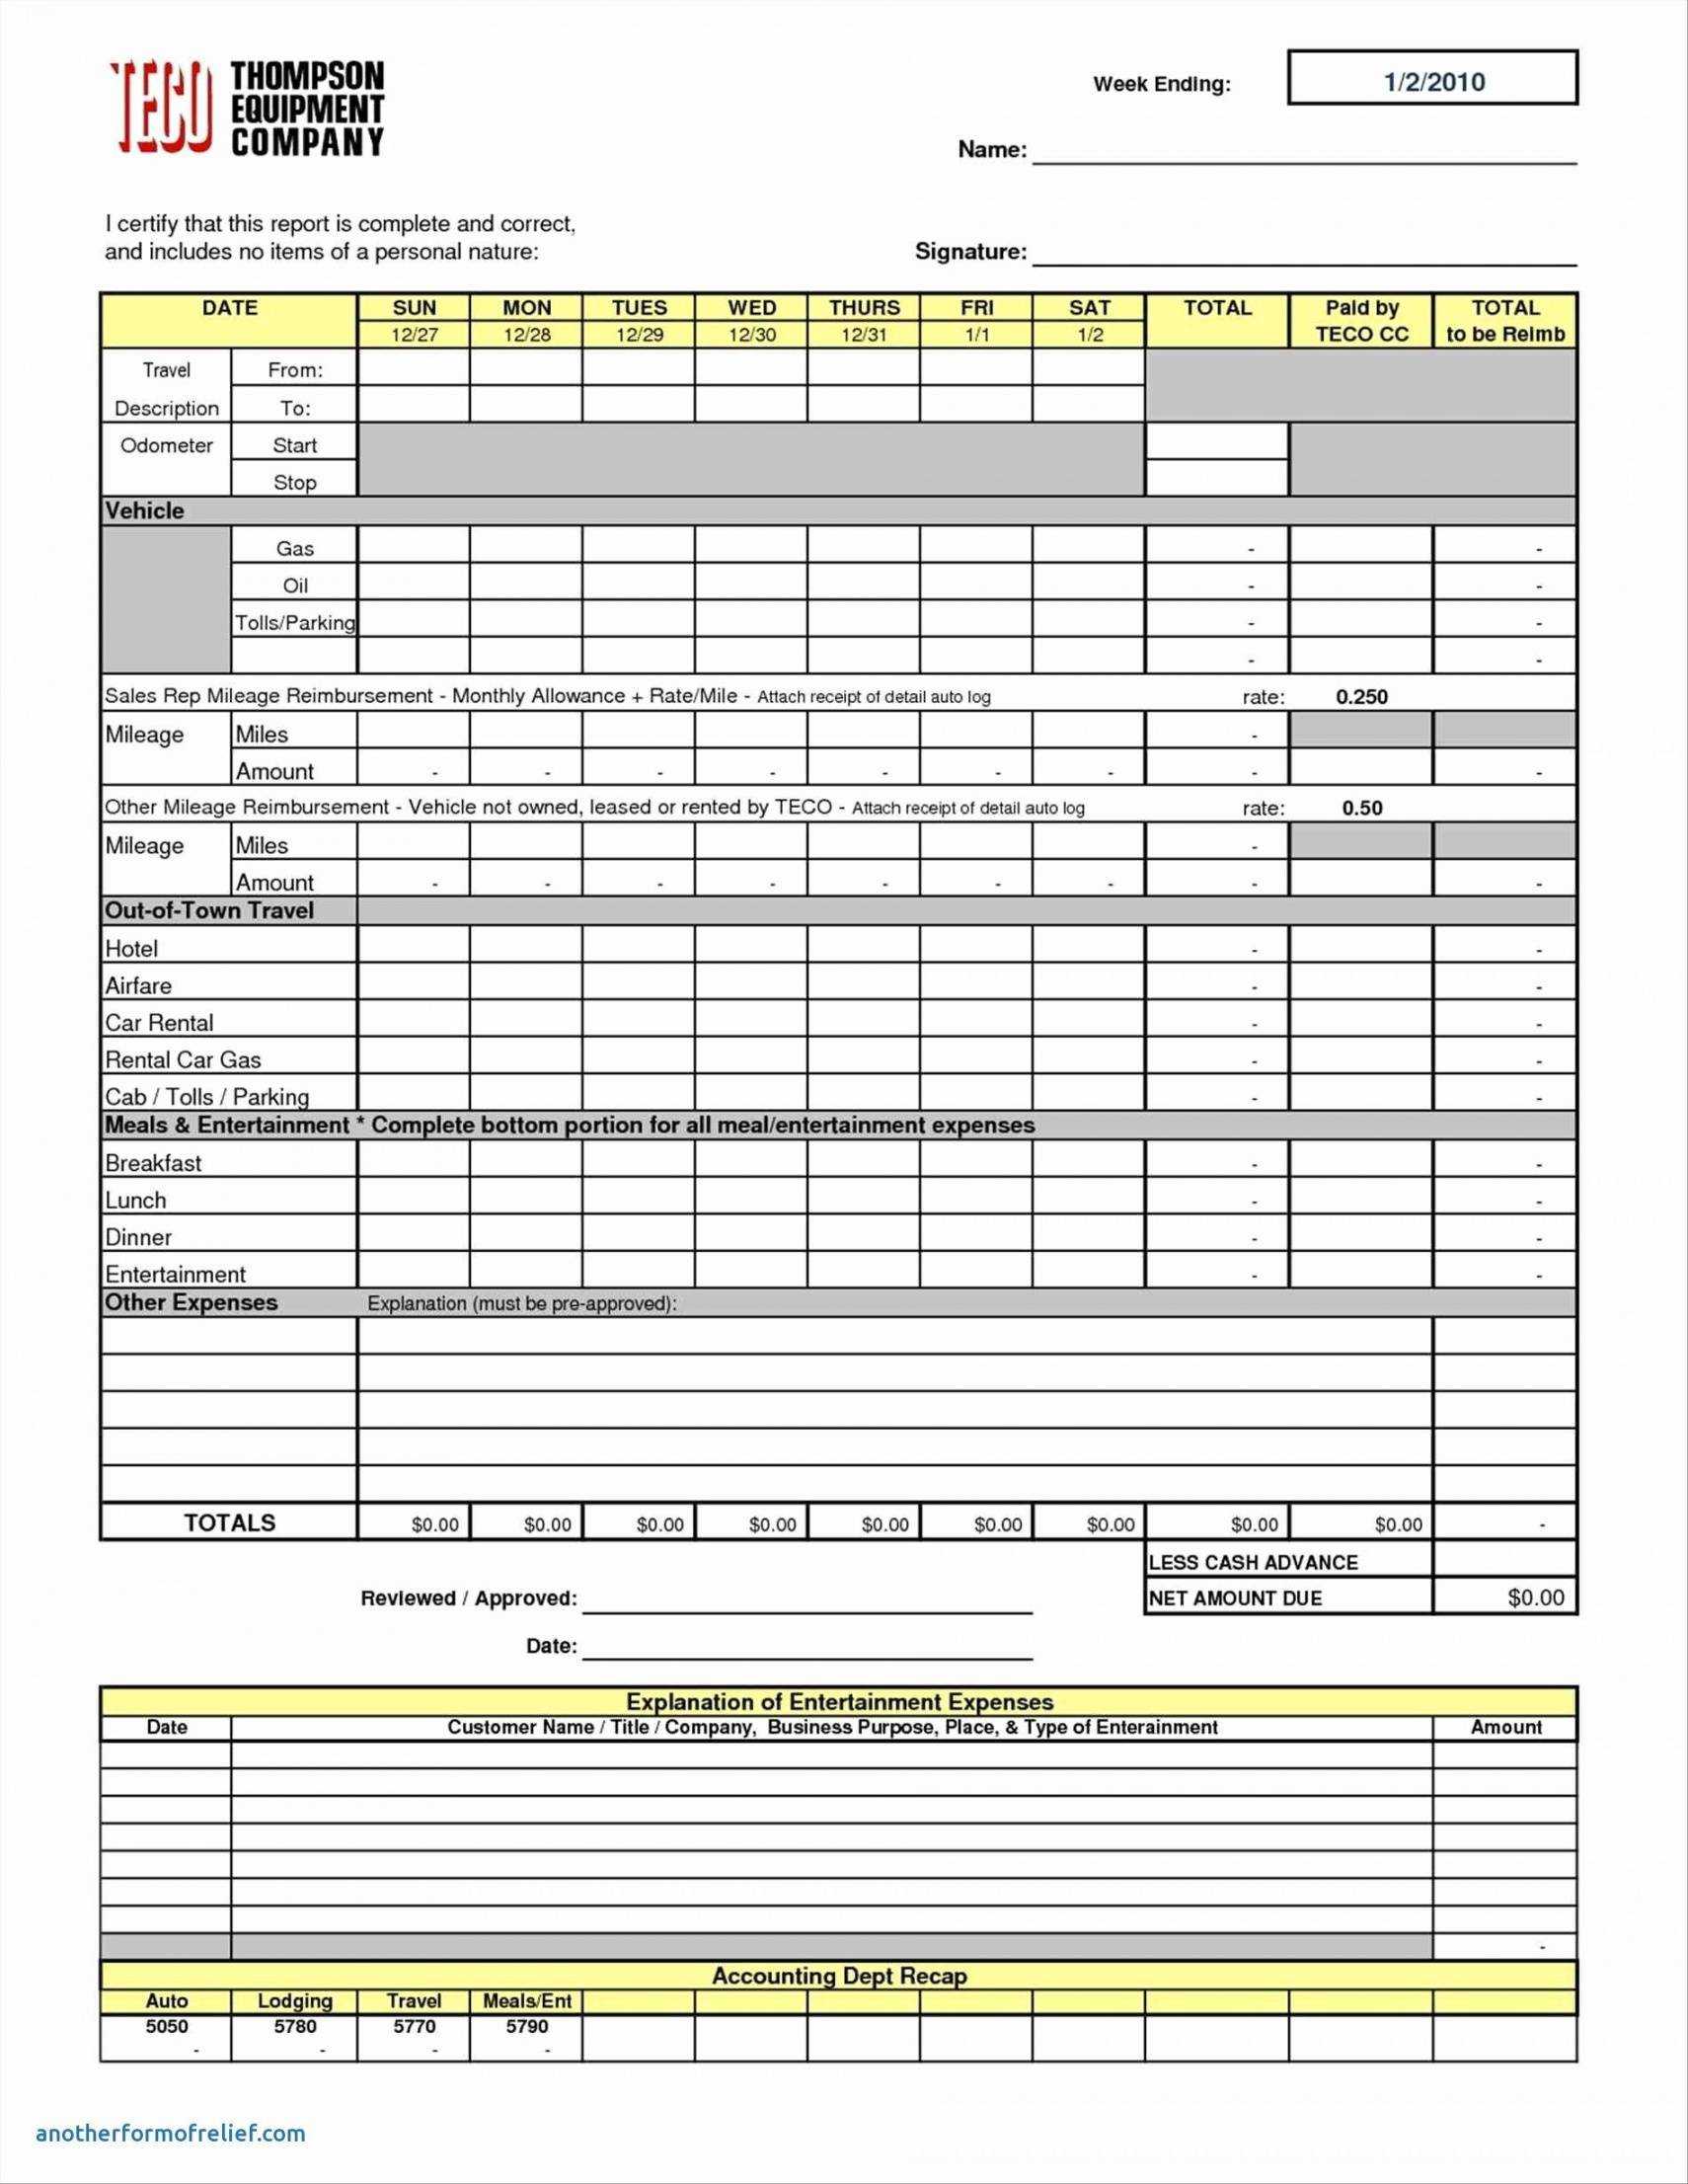 Sample Balance Sheet For Llc Glendale Community Document Pertaining To Air Balance Report Template